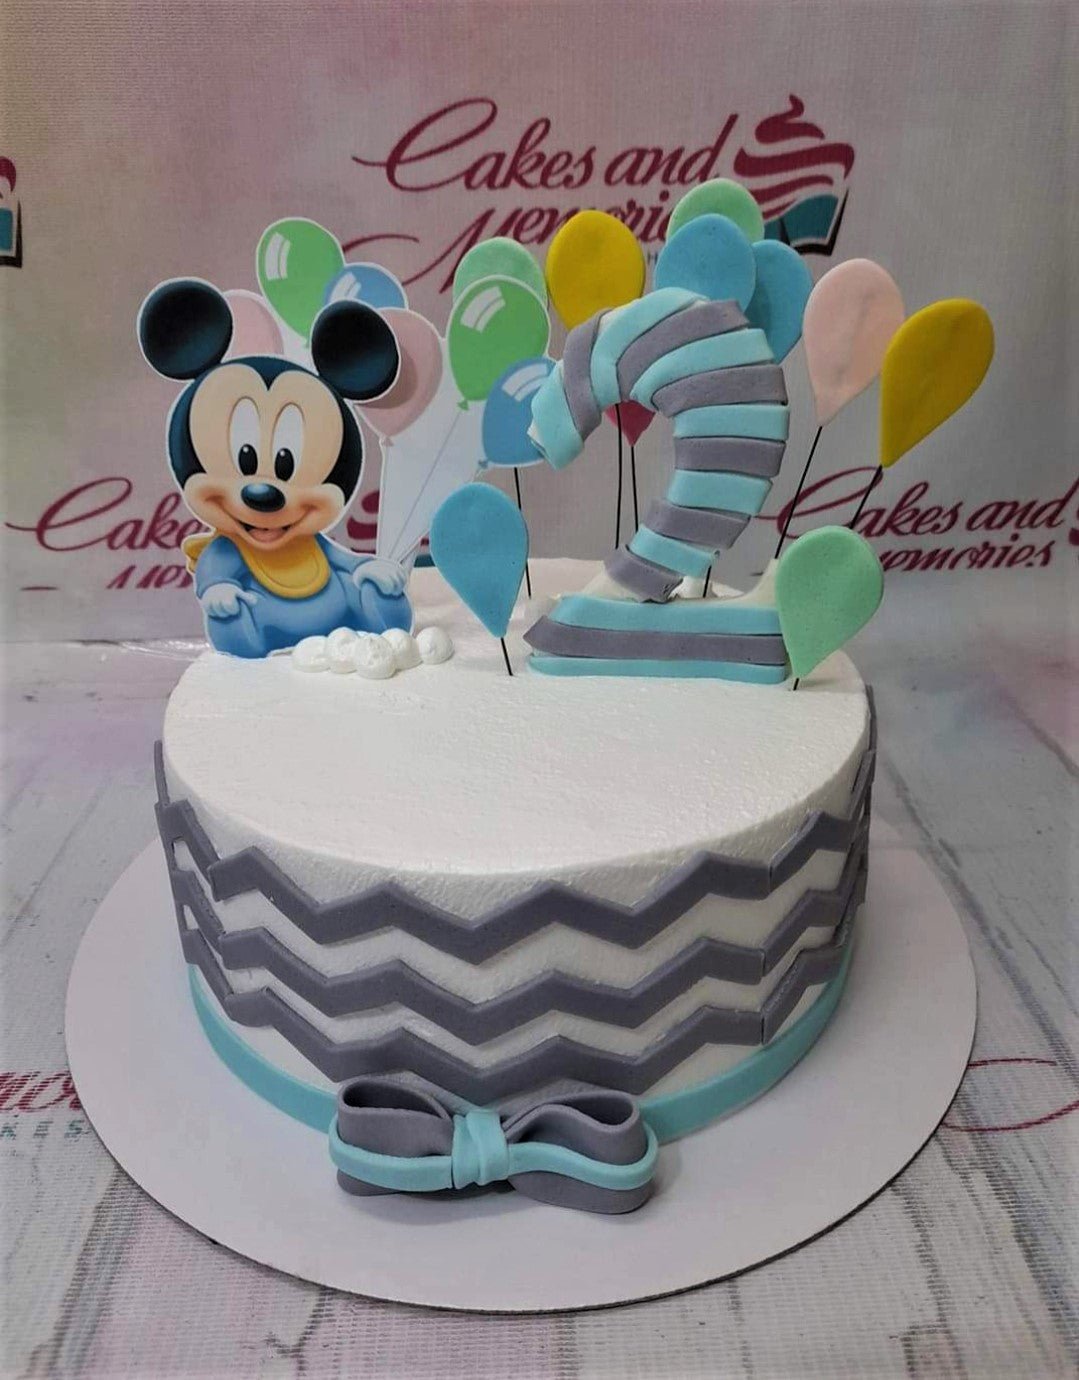 Sweet Garden - 💙Mickey Mouse thema cake💙 Meer info  Sweet_garden1@outlook.com #cake#mickeymousecake #rotterdam#noordmolenstraat#zwartjanstraat#blue#taart#mouse#sweet#boy#patisserie#theme#drip#birthdaycake  #foodies#love#party#fruit #cupcake#soft ...